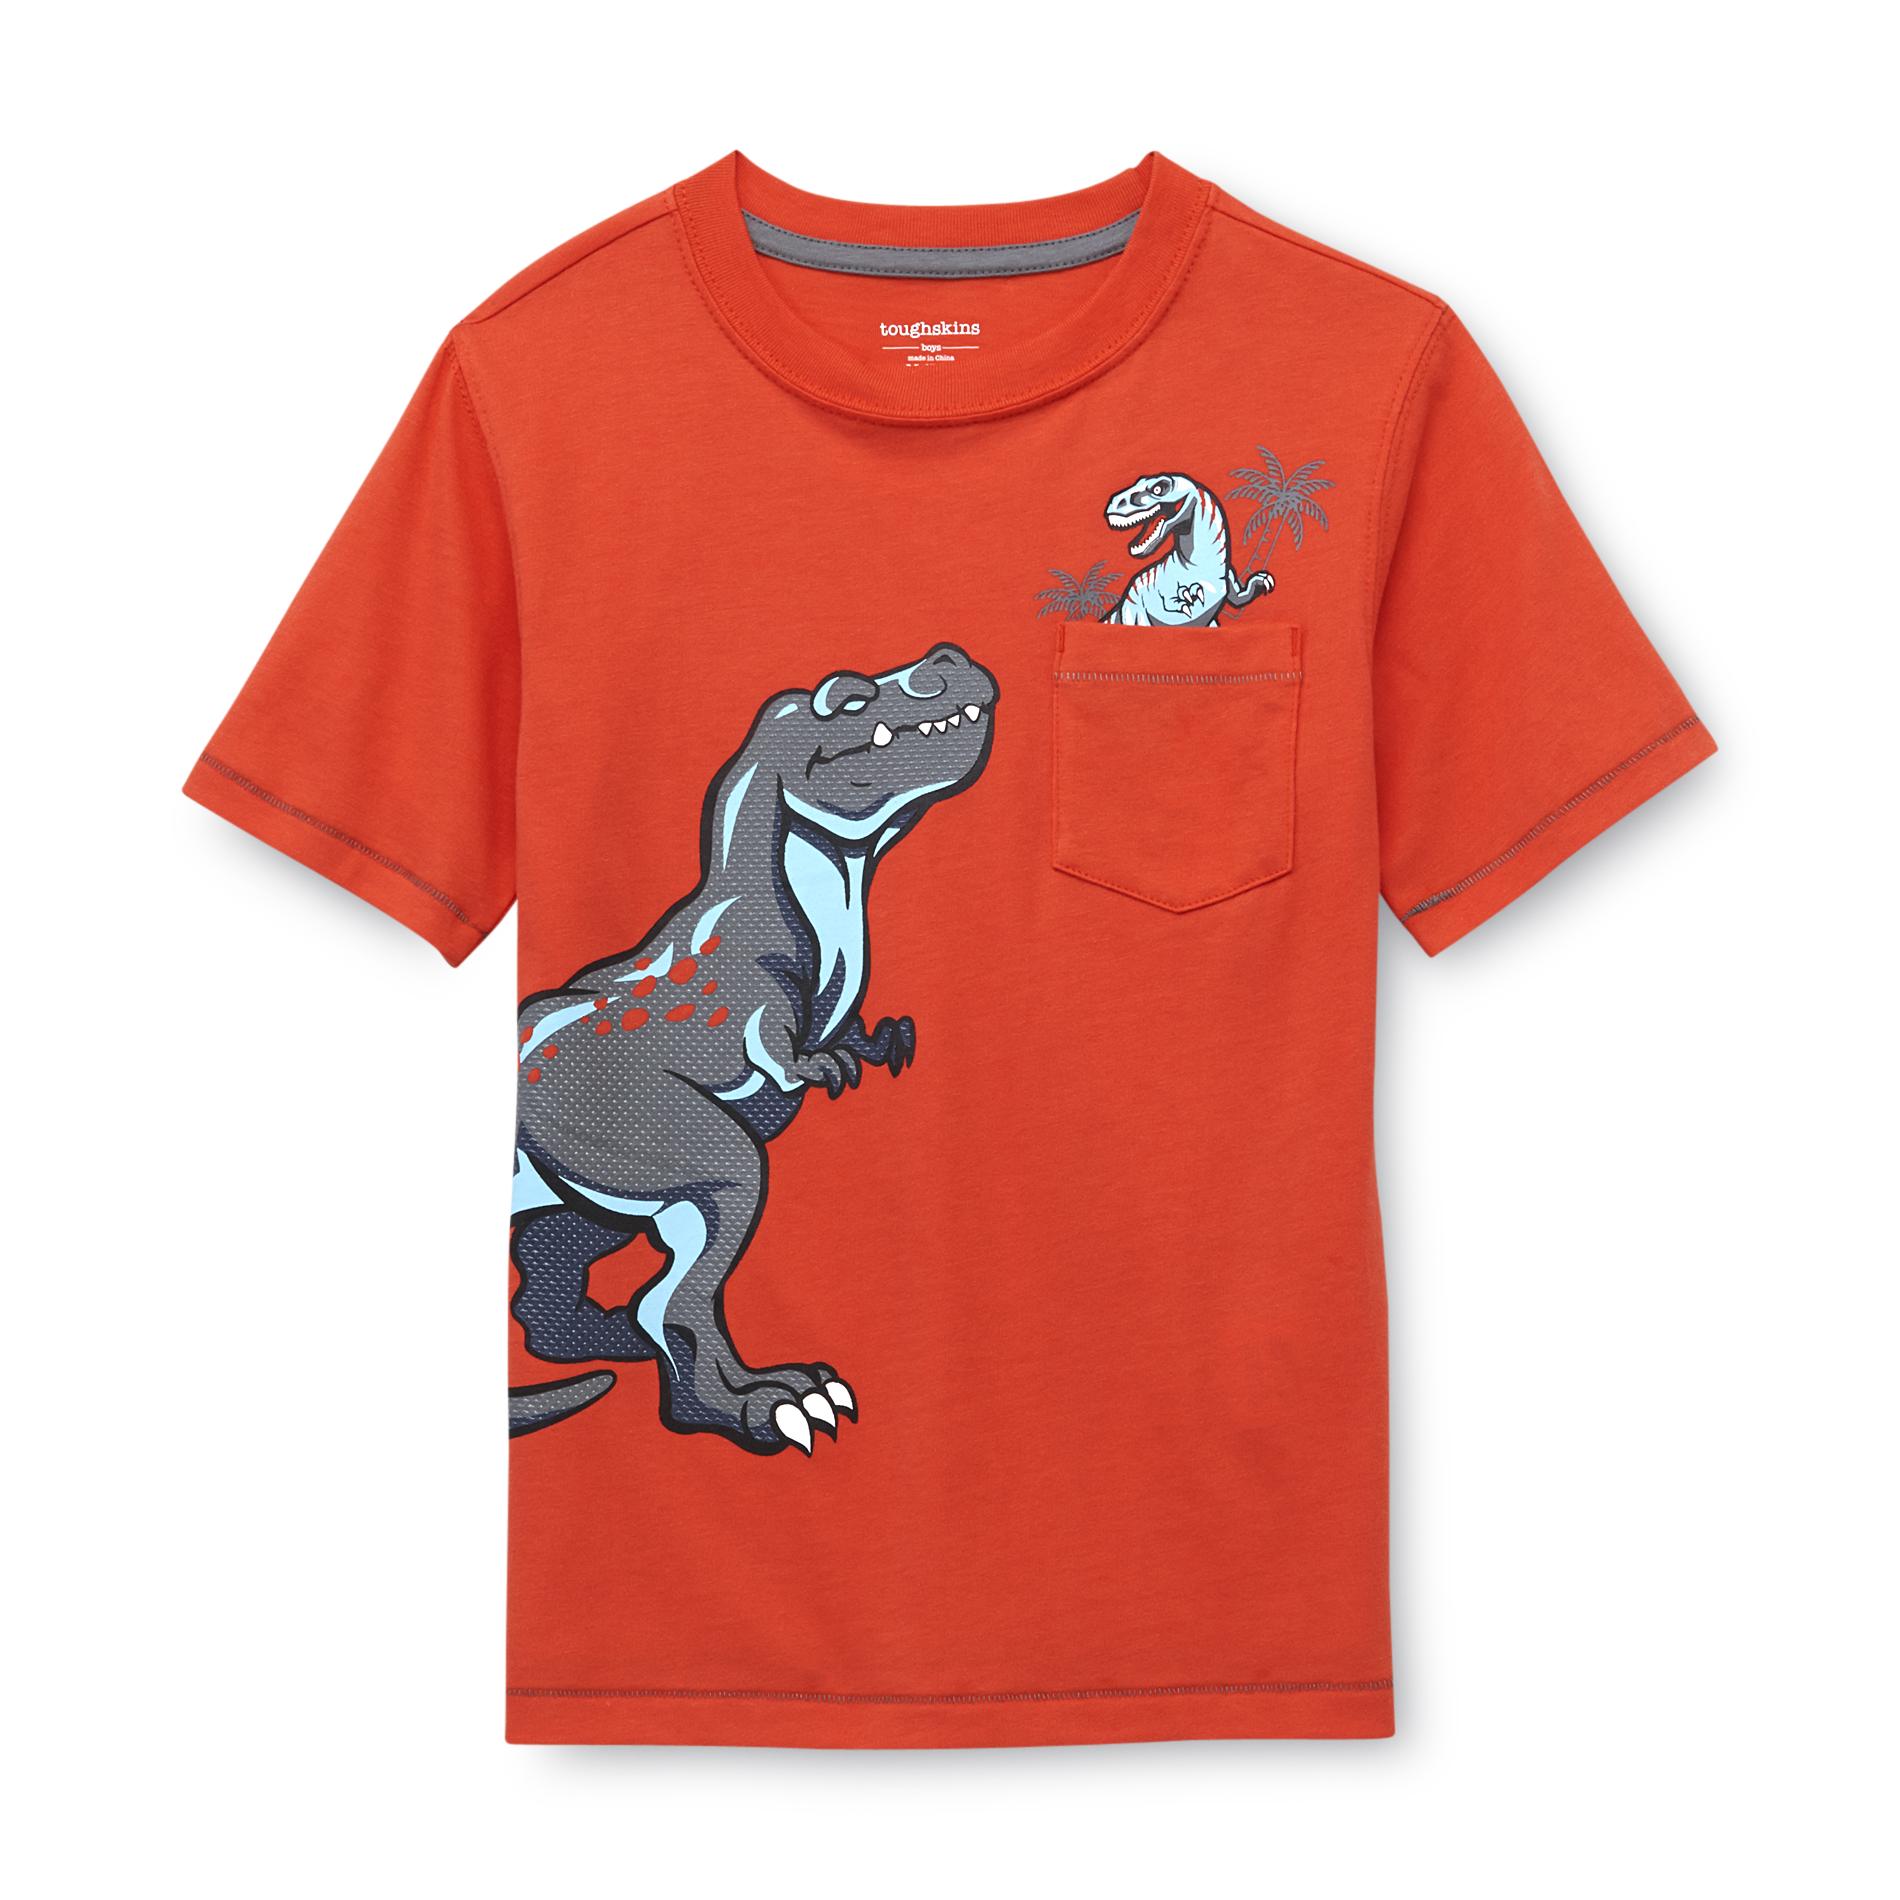 Toughskins Boy's Graphic T-Shirt - T-Rex